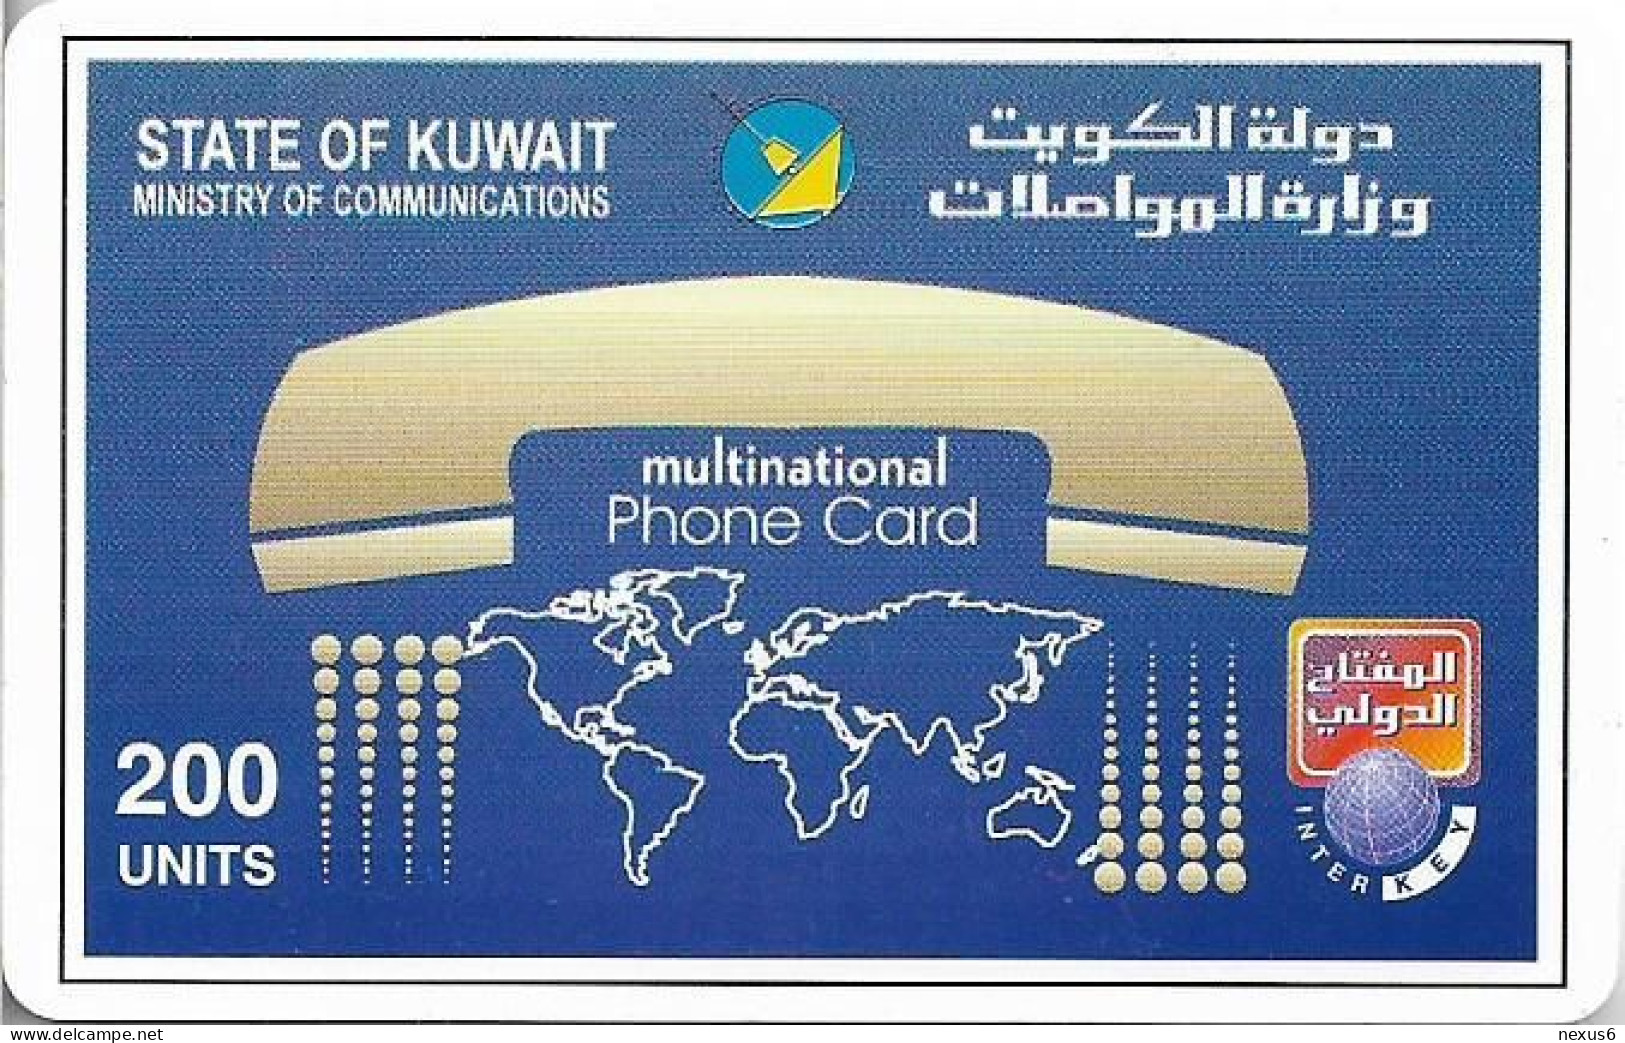 Kuwait - InterKey - Multinational Phone Card, GRC04, Remote Mem. 200U, 1.000ex, Mint Unscratched - Kuwait